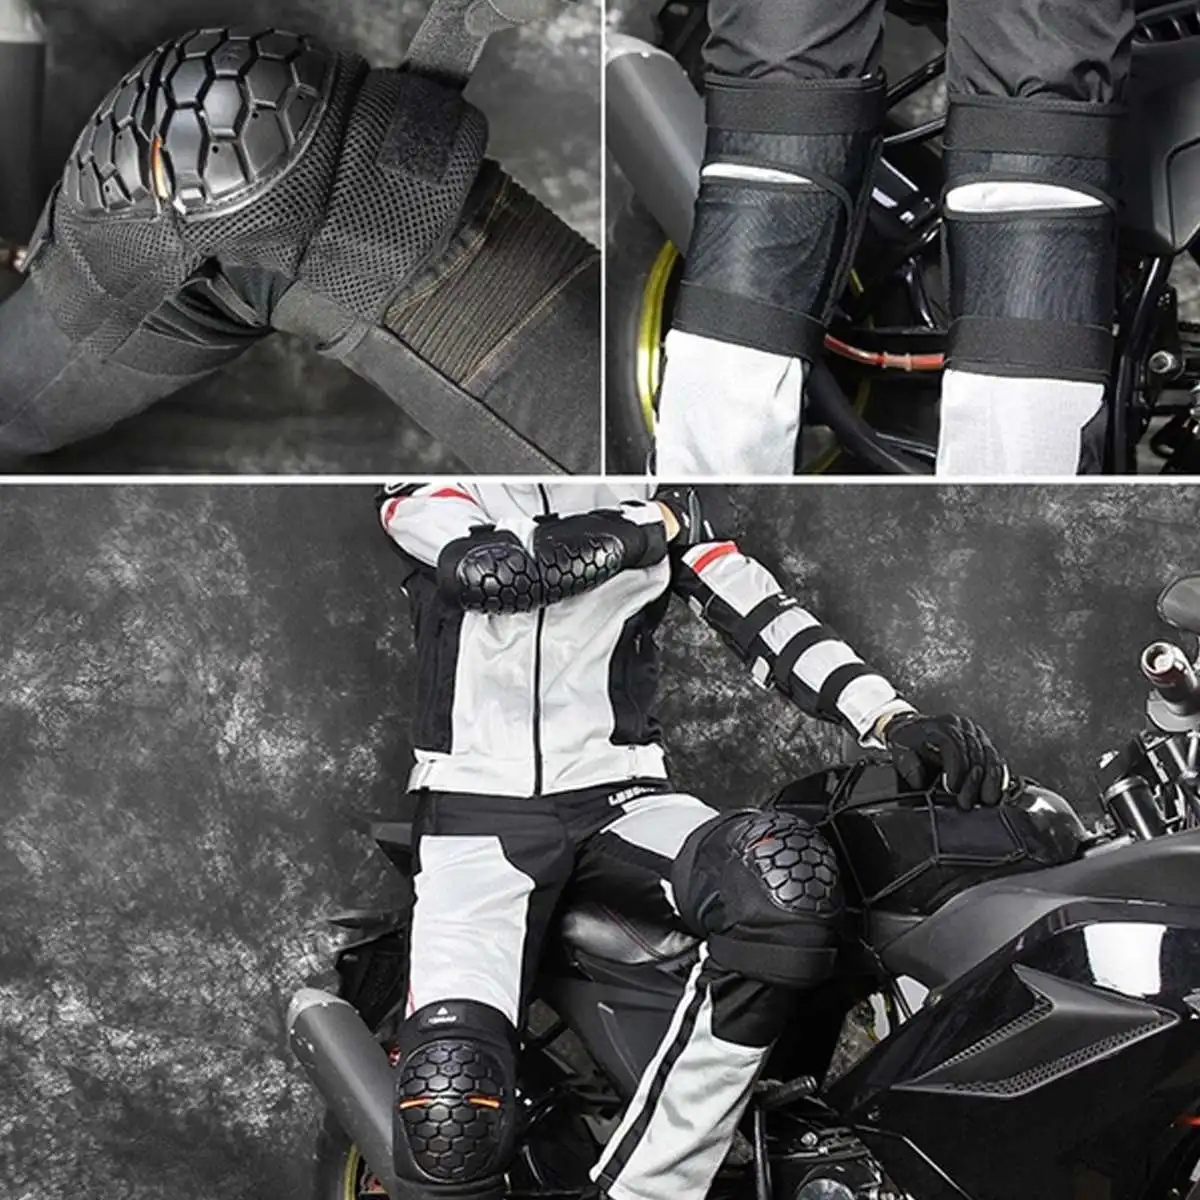 2pcs Protective Plate Knee Protector Guard Motorcycle Ski Snowboard Skating Protection Elbow Knee Pads